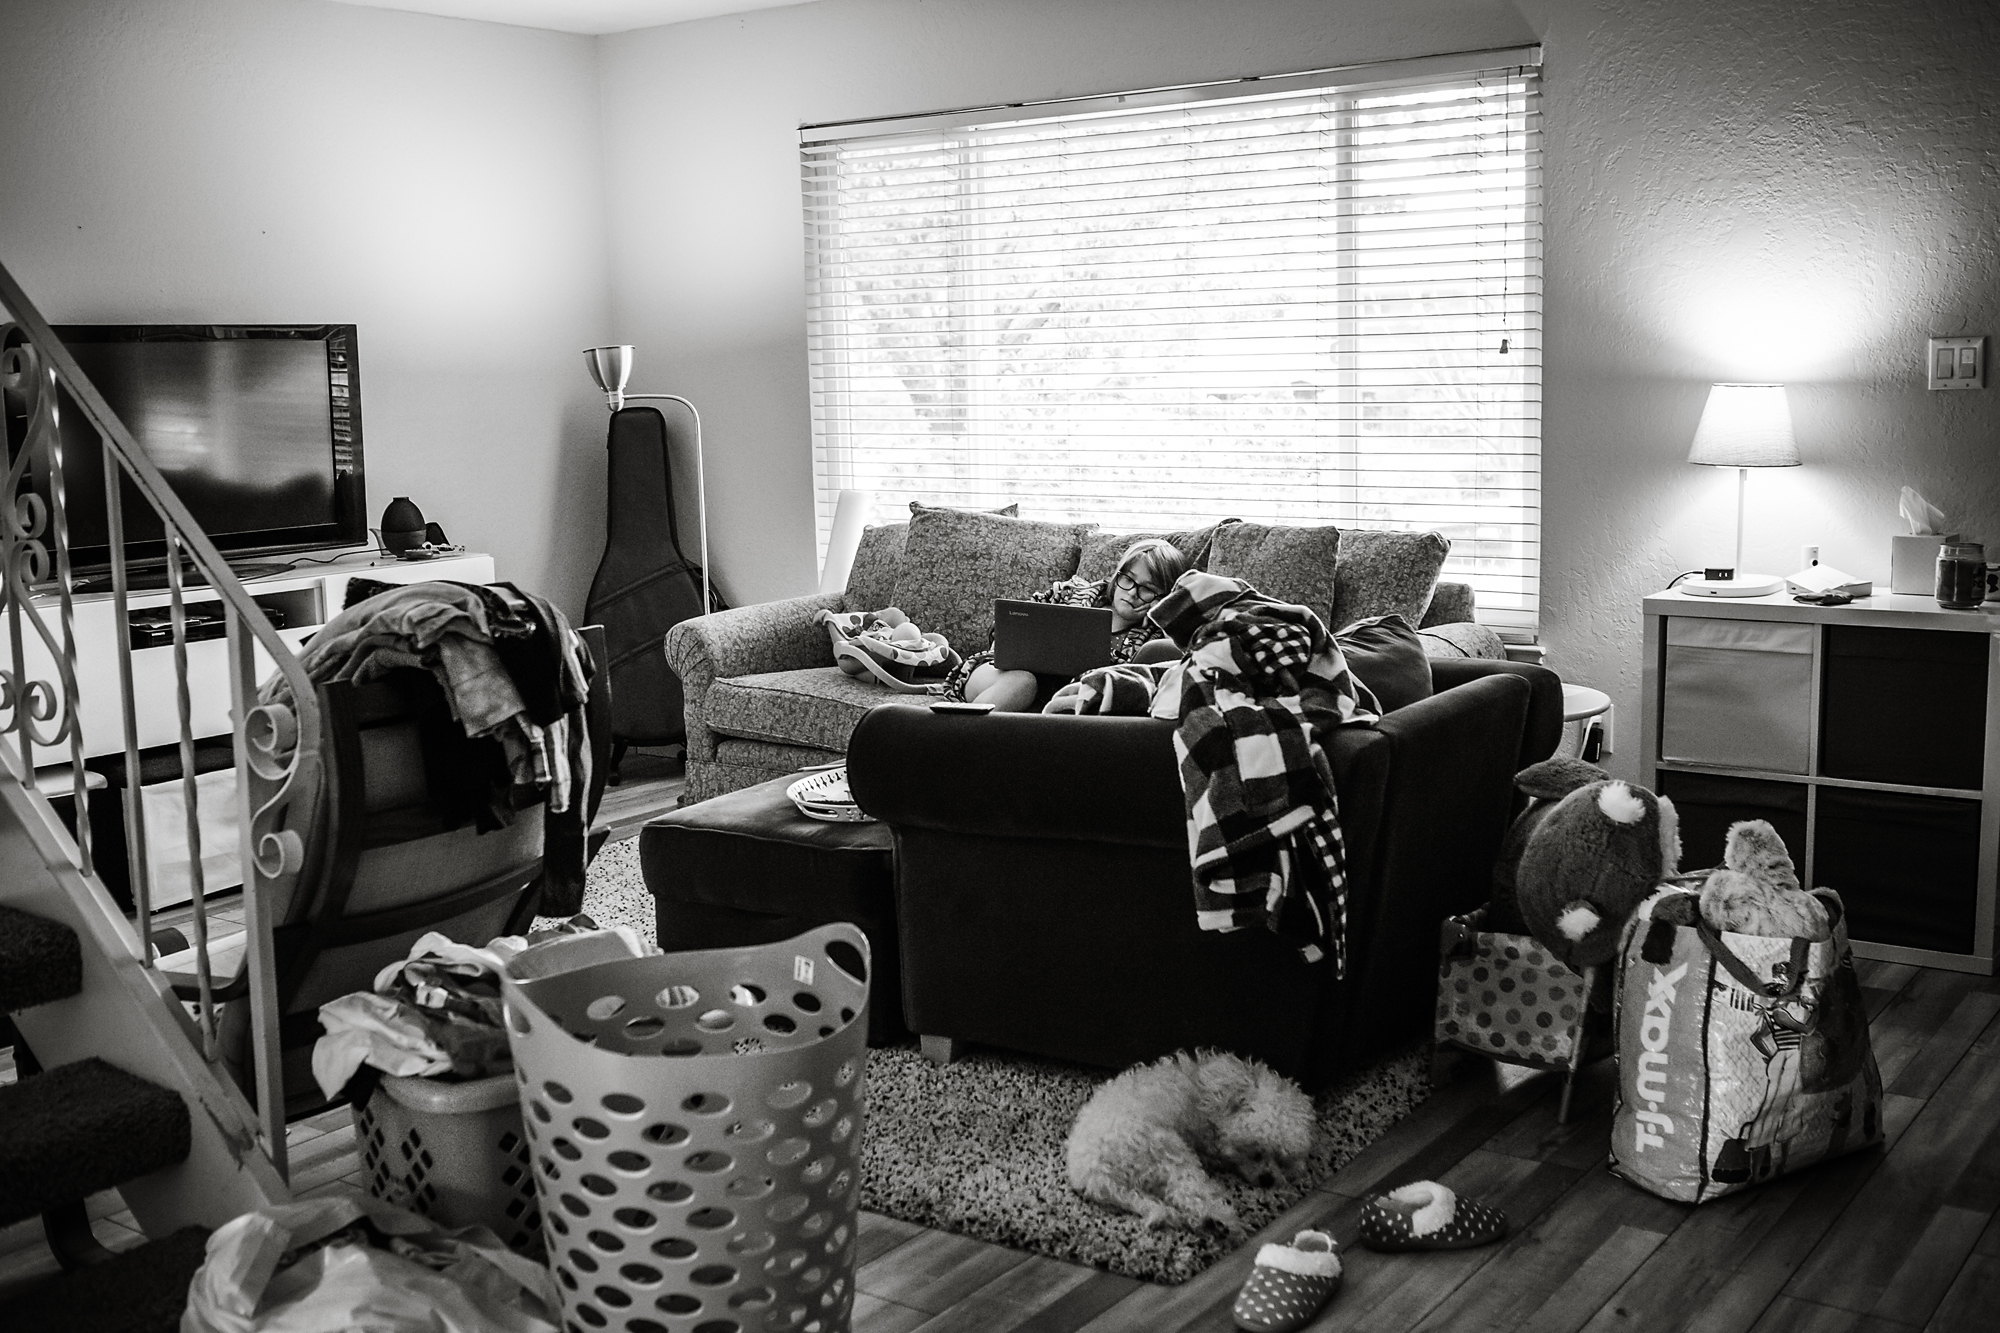 laundry piled up - documentary family photography